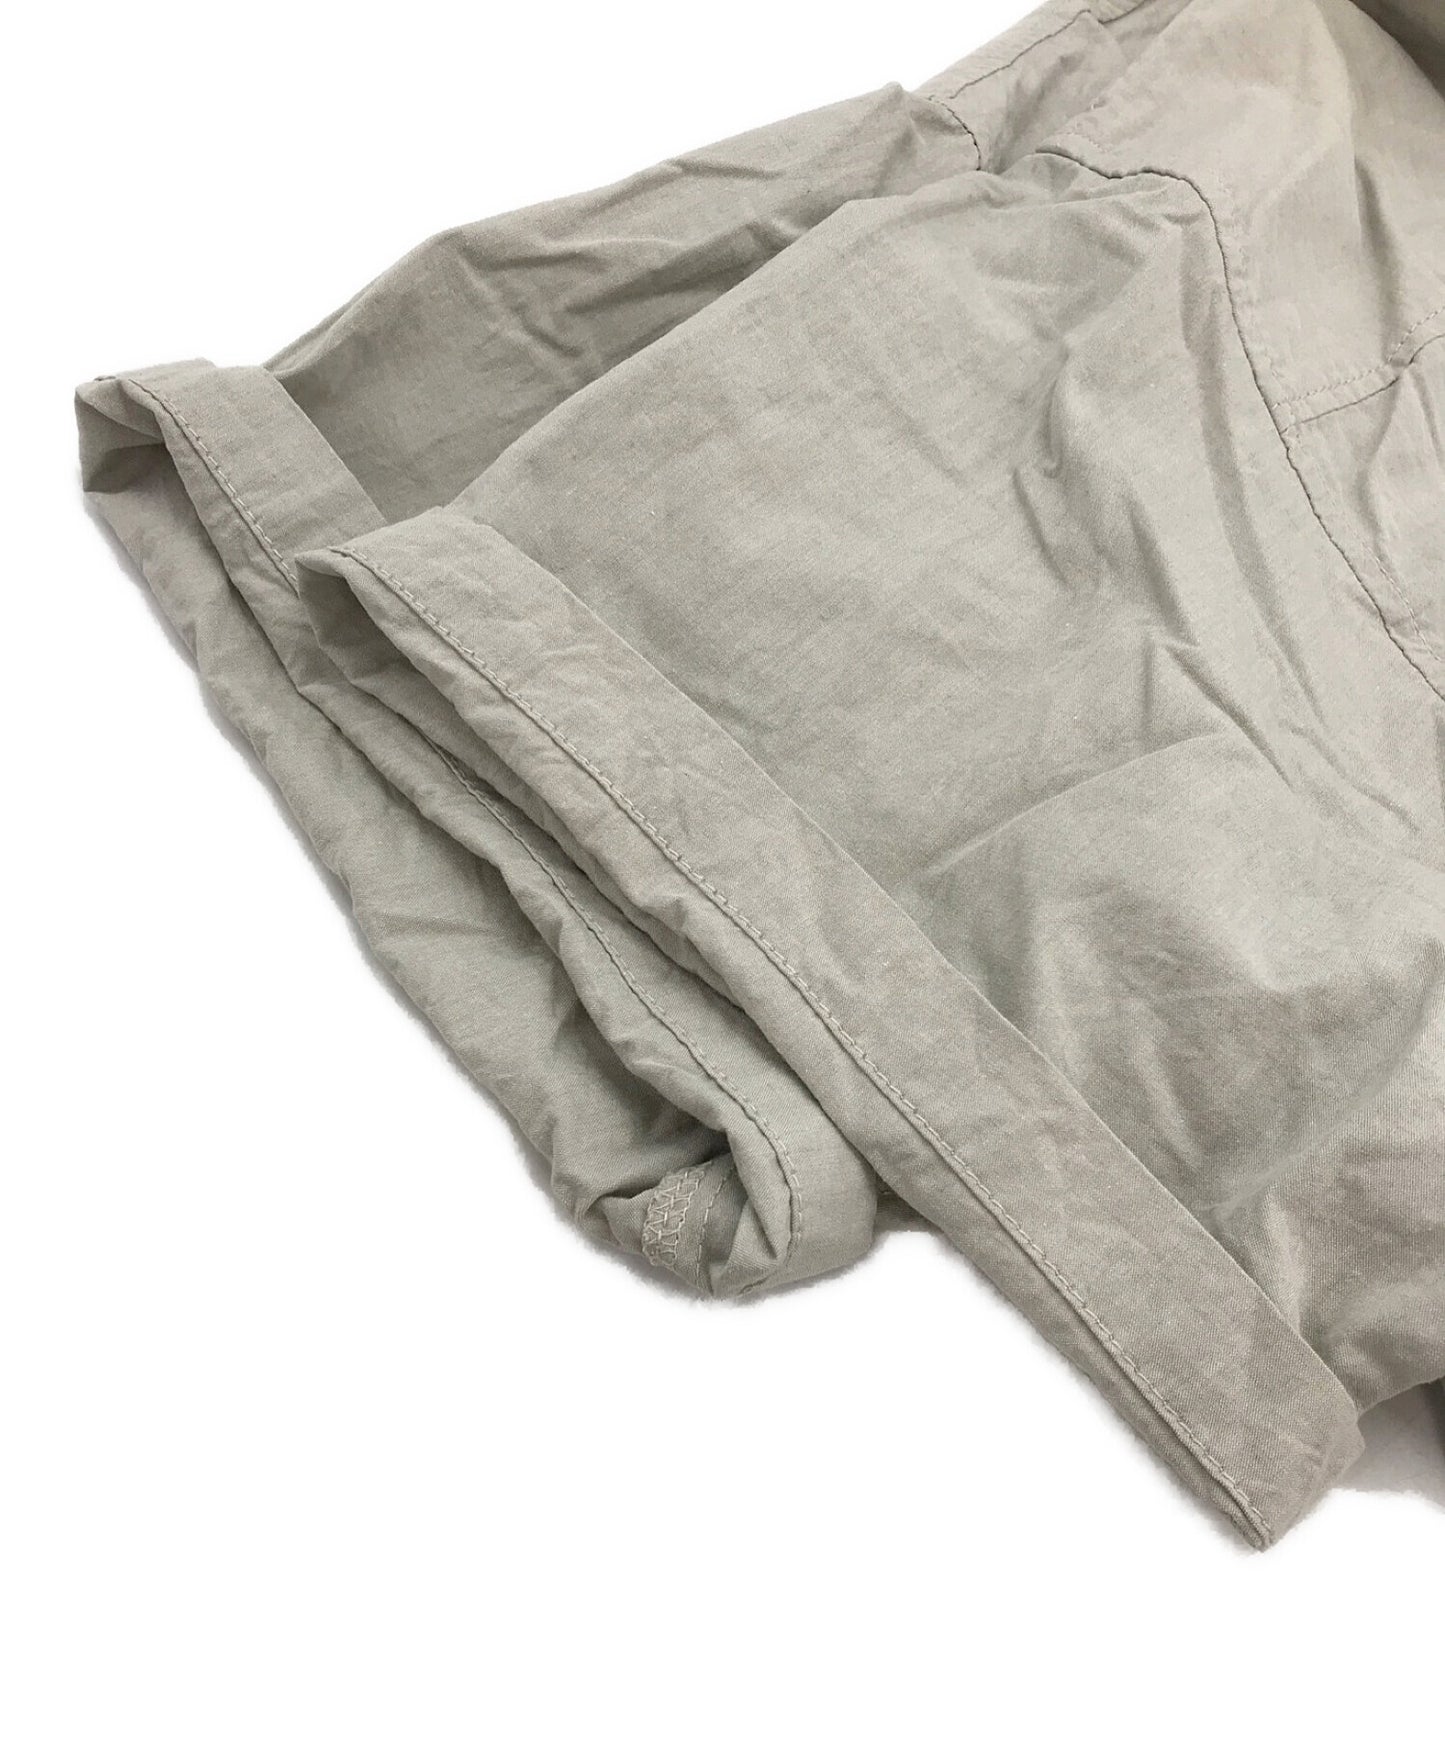 [Pre-owned] NEIGHBORHOOD Chambray Shirt Short Sleeve Shirt Shirt 231TSNH-SHM03